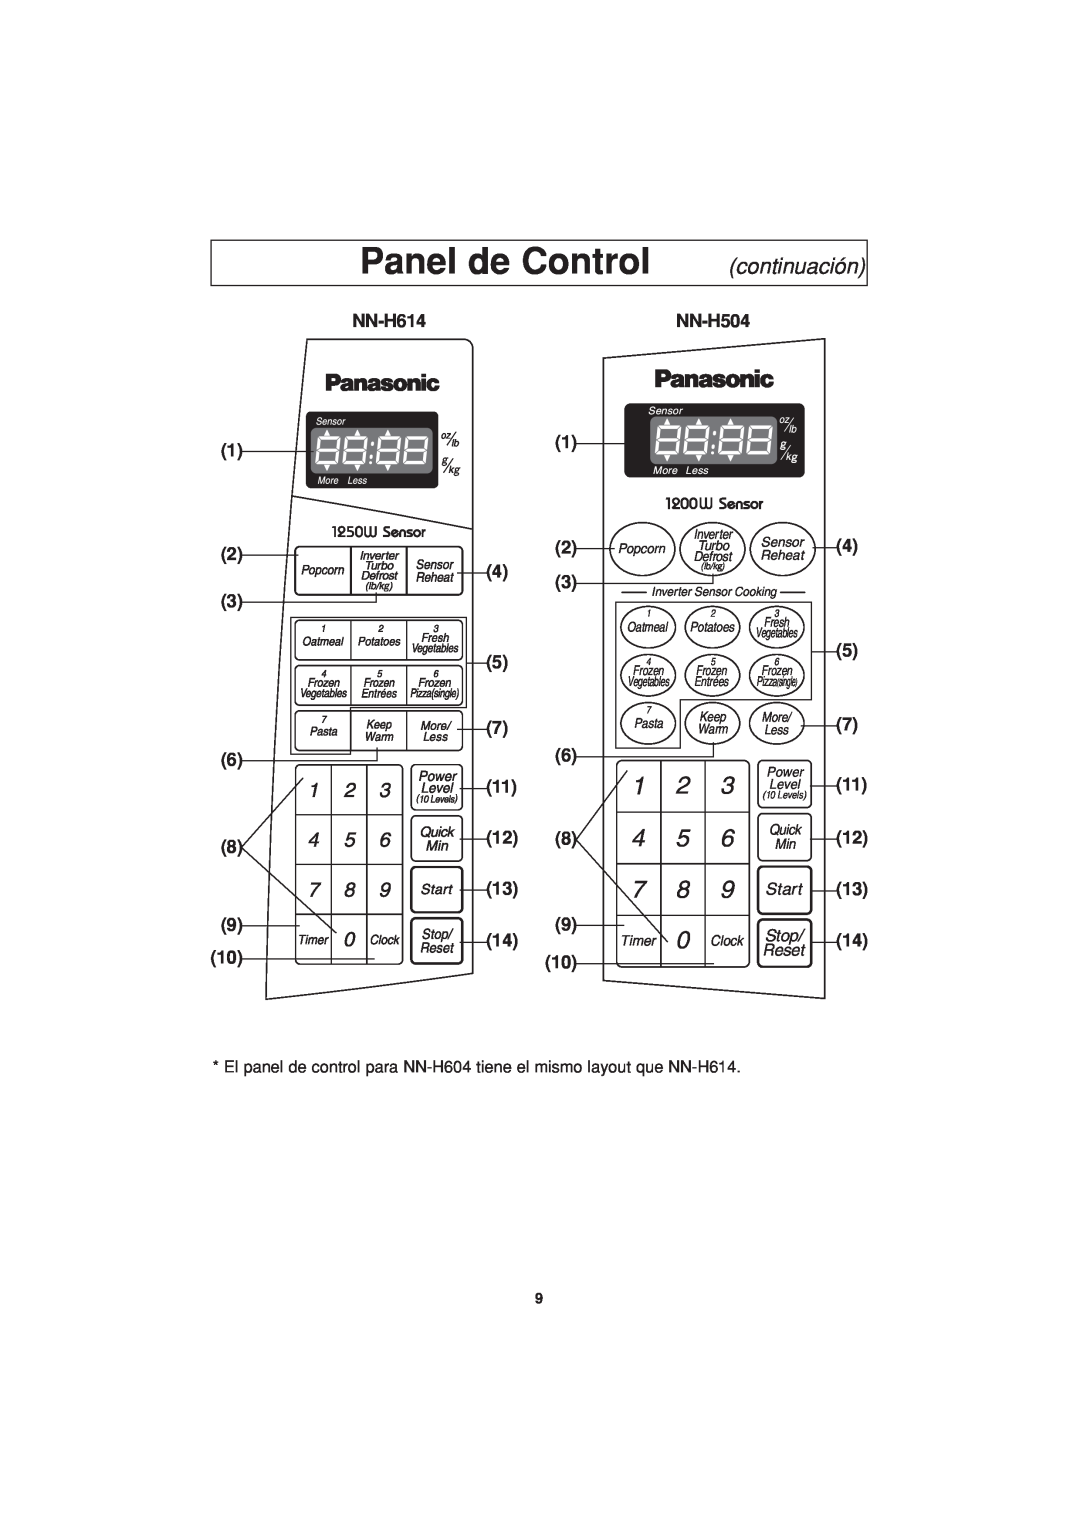 Panasonic NN-H504 continuación, Panel de Control, 4 5 6 Min 7 8 9 Start, Oatmeal, Potatoes, Keep, More, Pasta, Less 